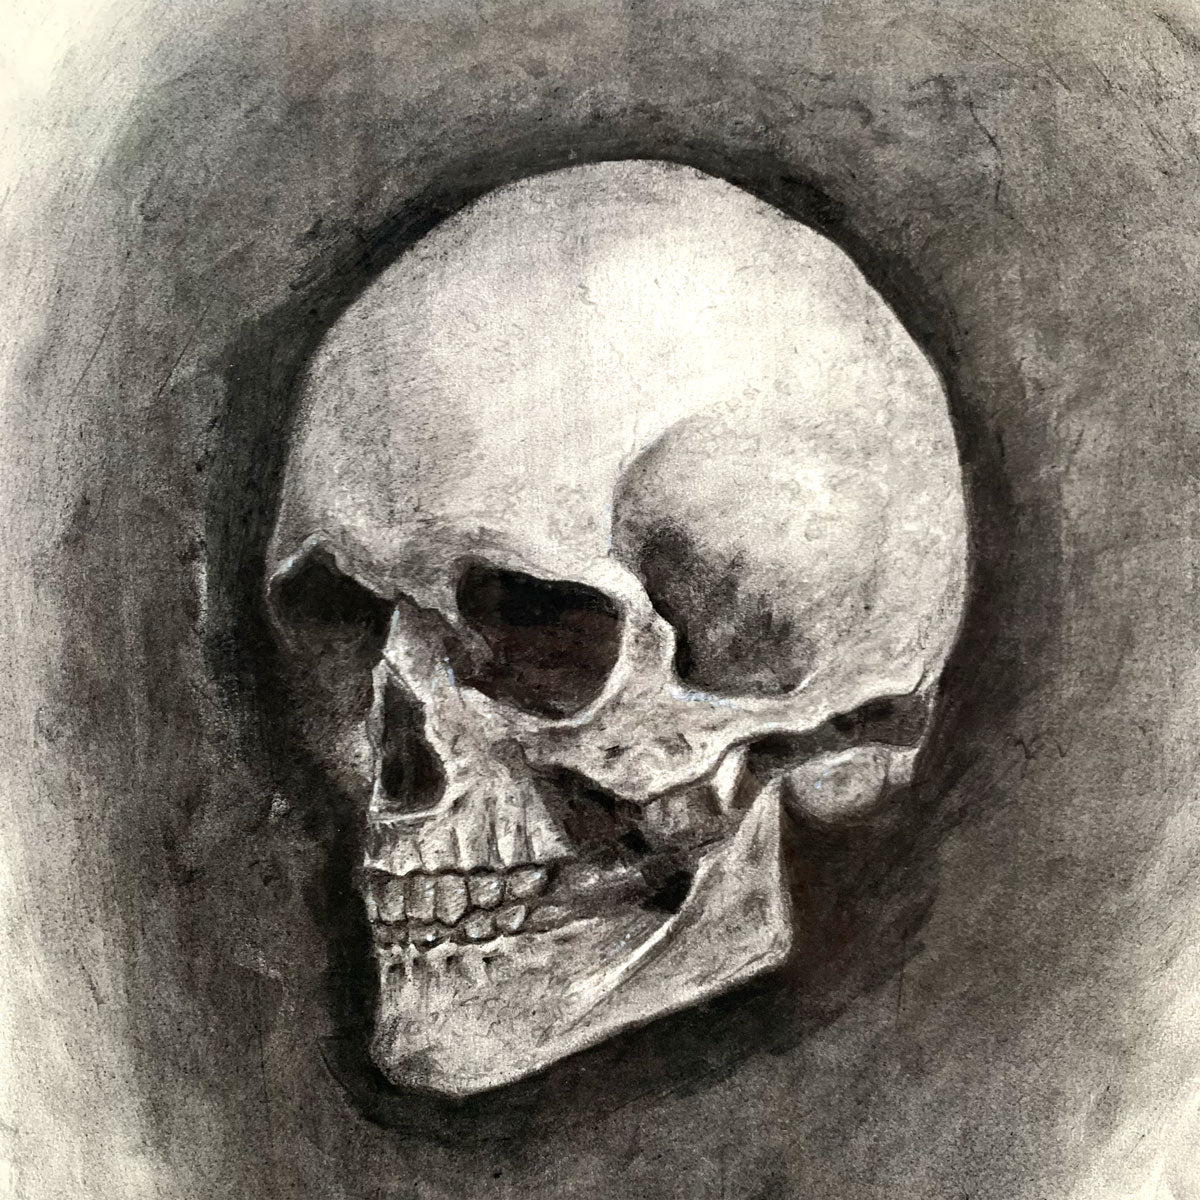 Evil Skull Drawing Realistic - Drawing Skill